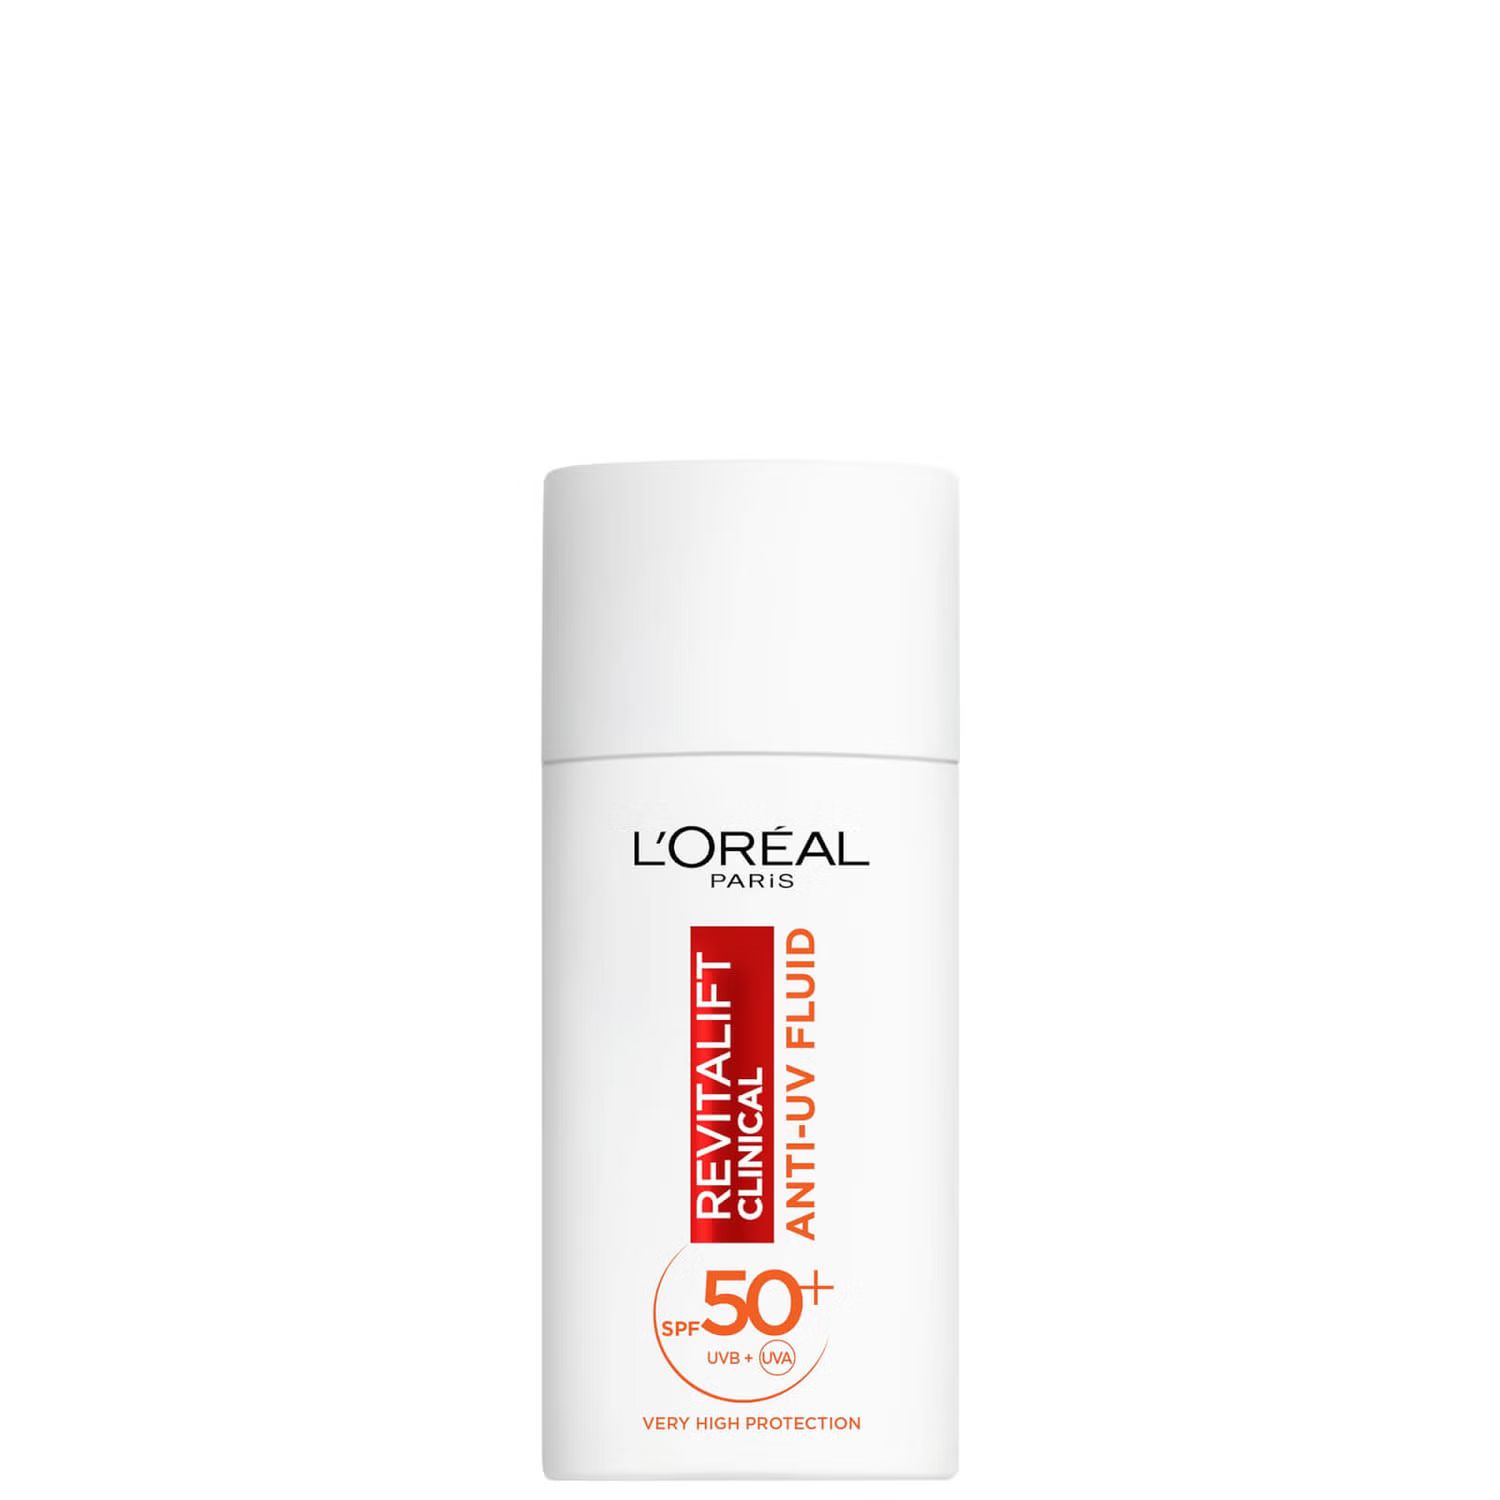 L'Oréal Paris Revitalift Clinical Vitamin C UV Fluid SPF 50+ Moisturiser 50ml | Look Fantastic (ROW)